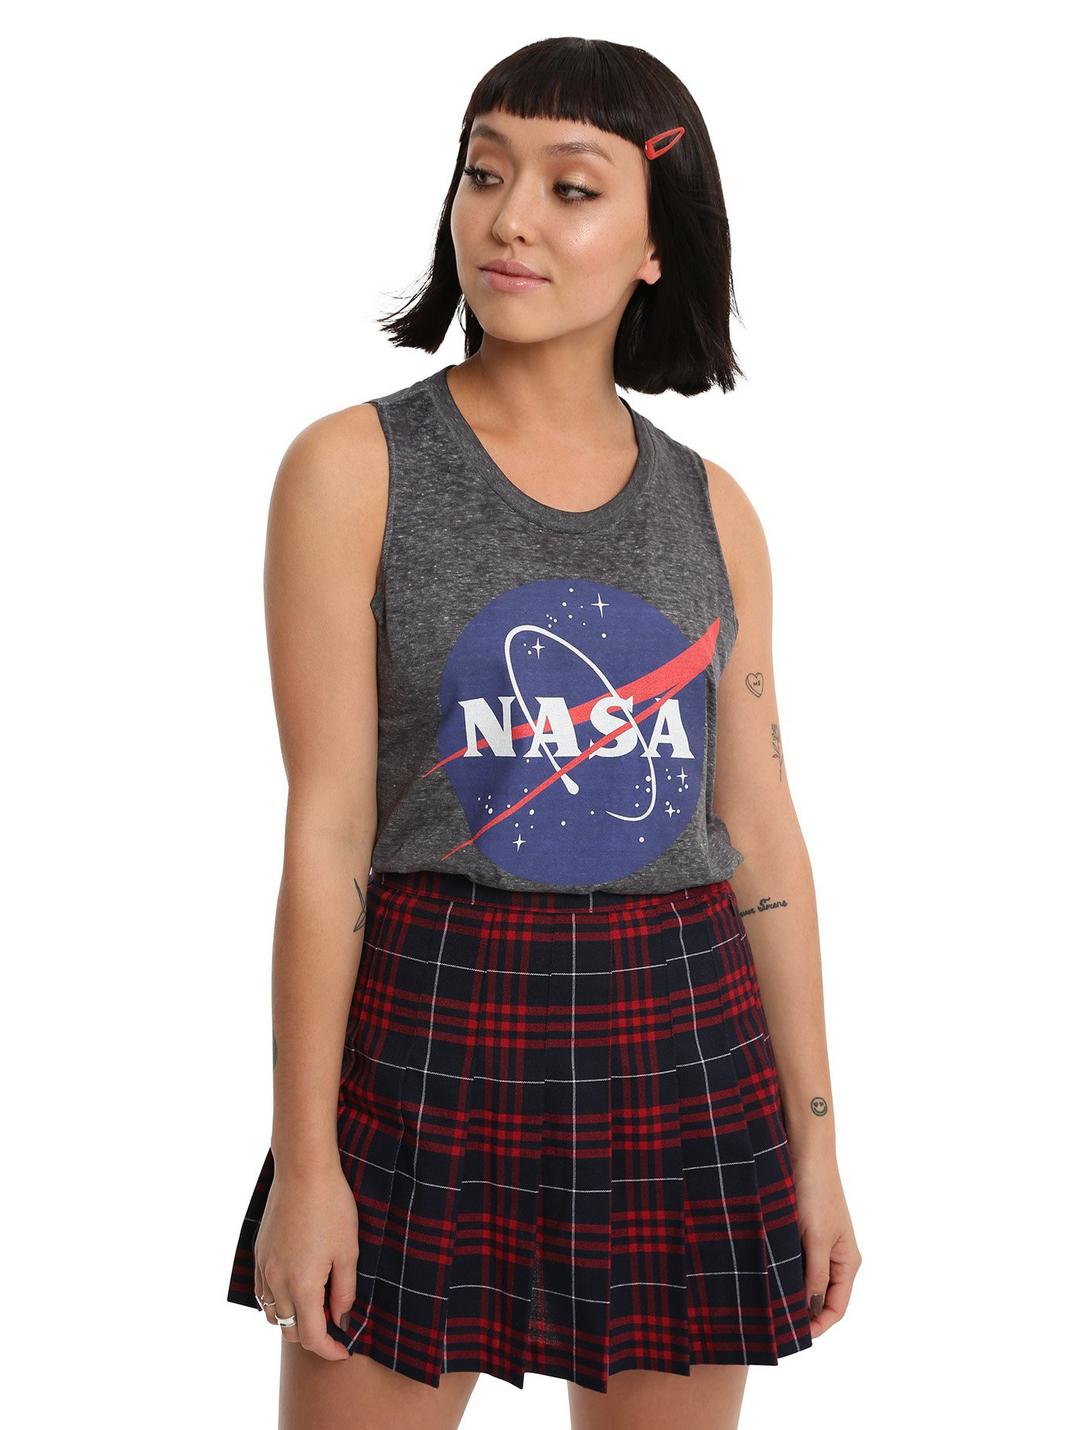 NASA Logo Burnout Girls Muscle Top, GREY, hi-res